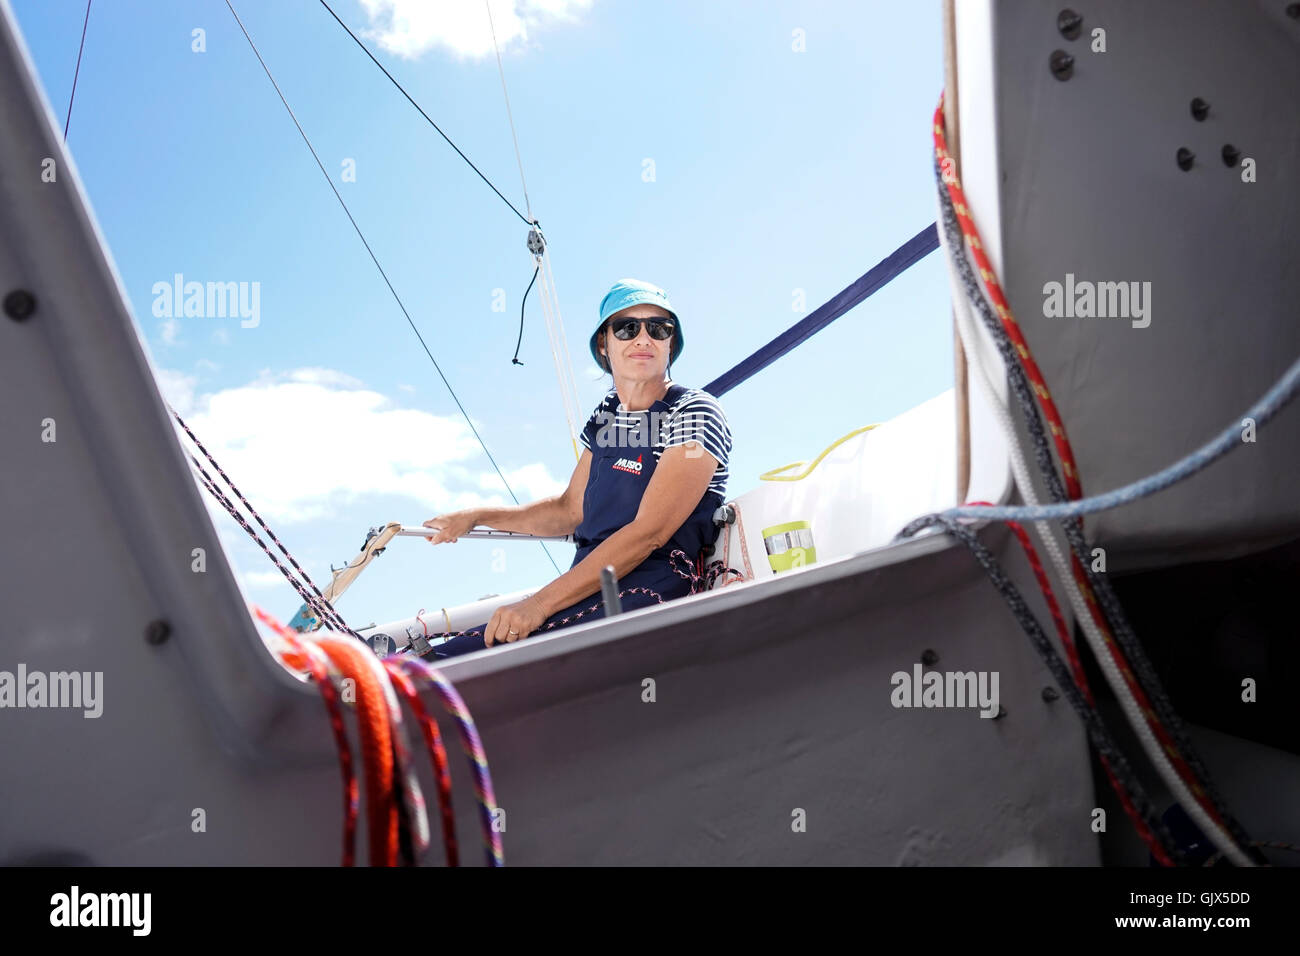 Woman helming sailing boat Stock Photo